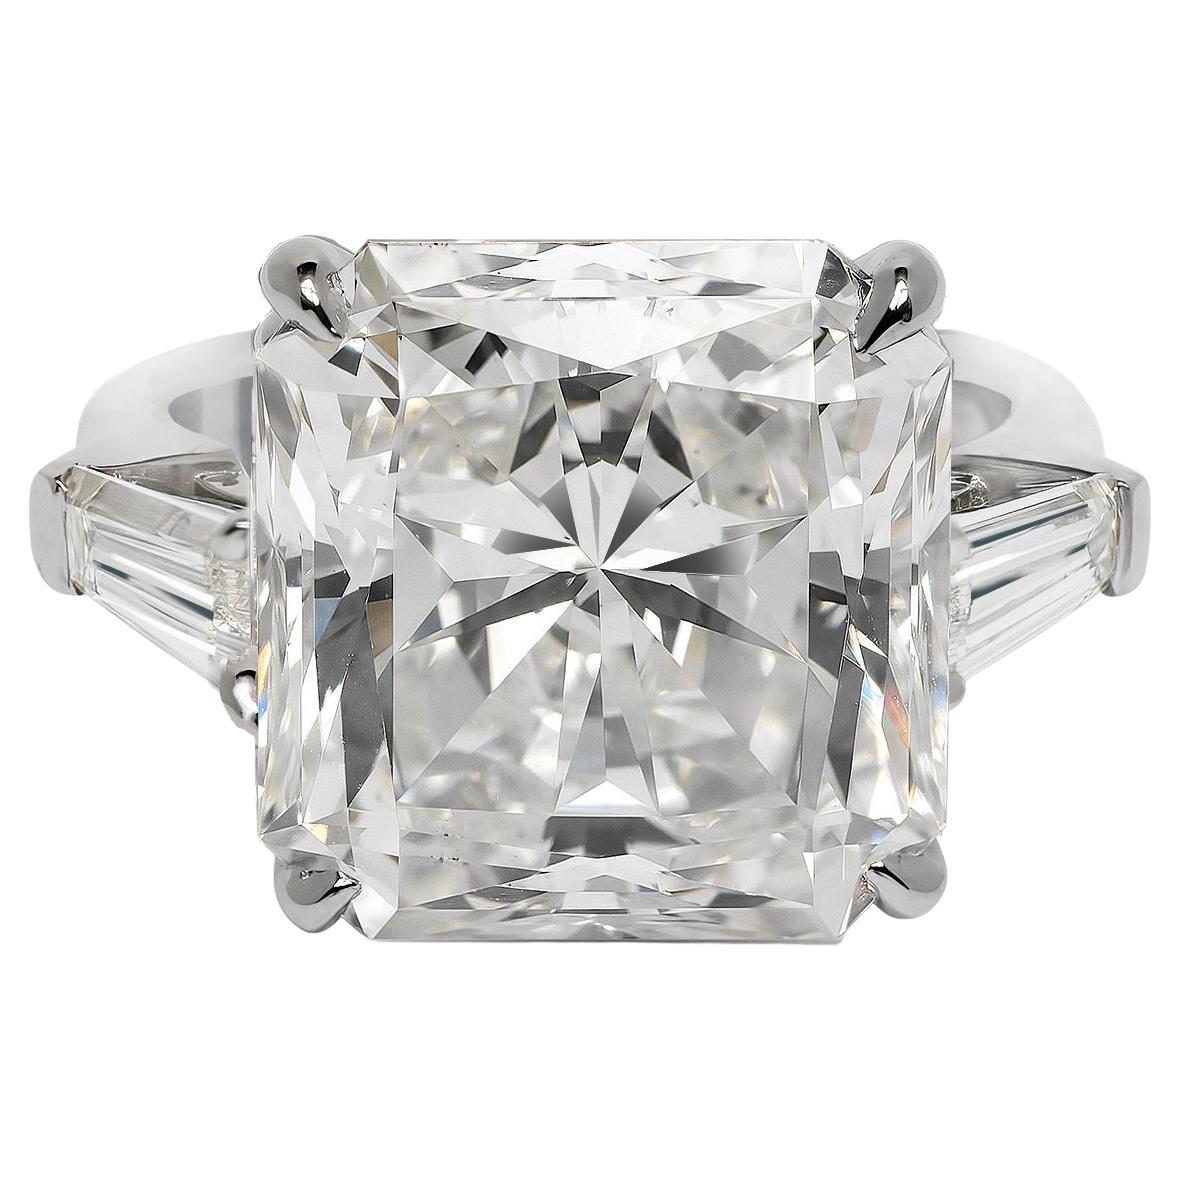 12 Carat Radiant Cut Diamond Engagement Ring GIA Certified J SI1